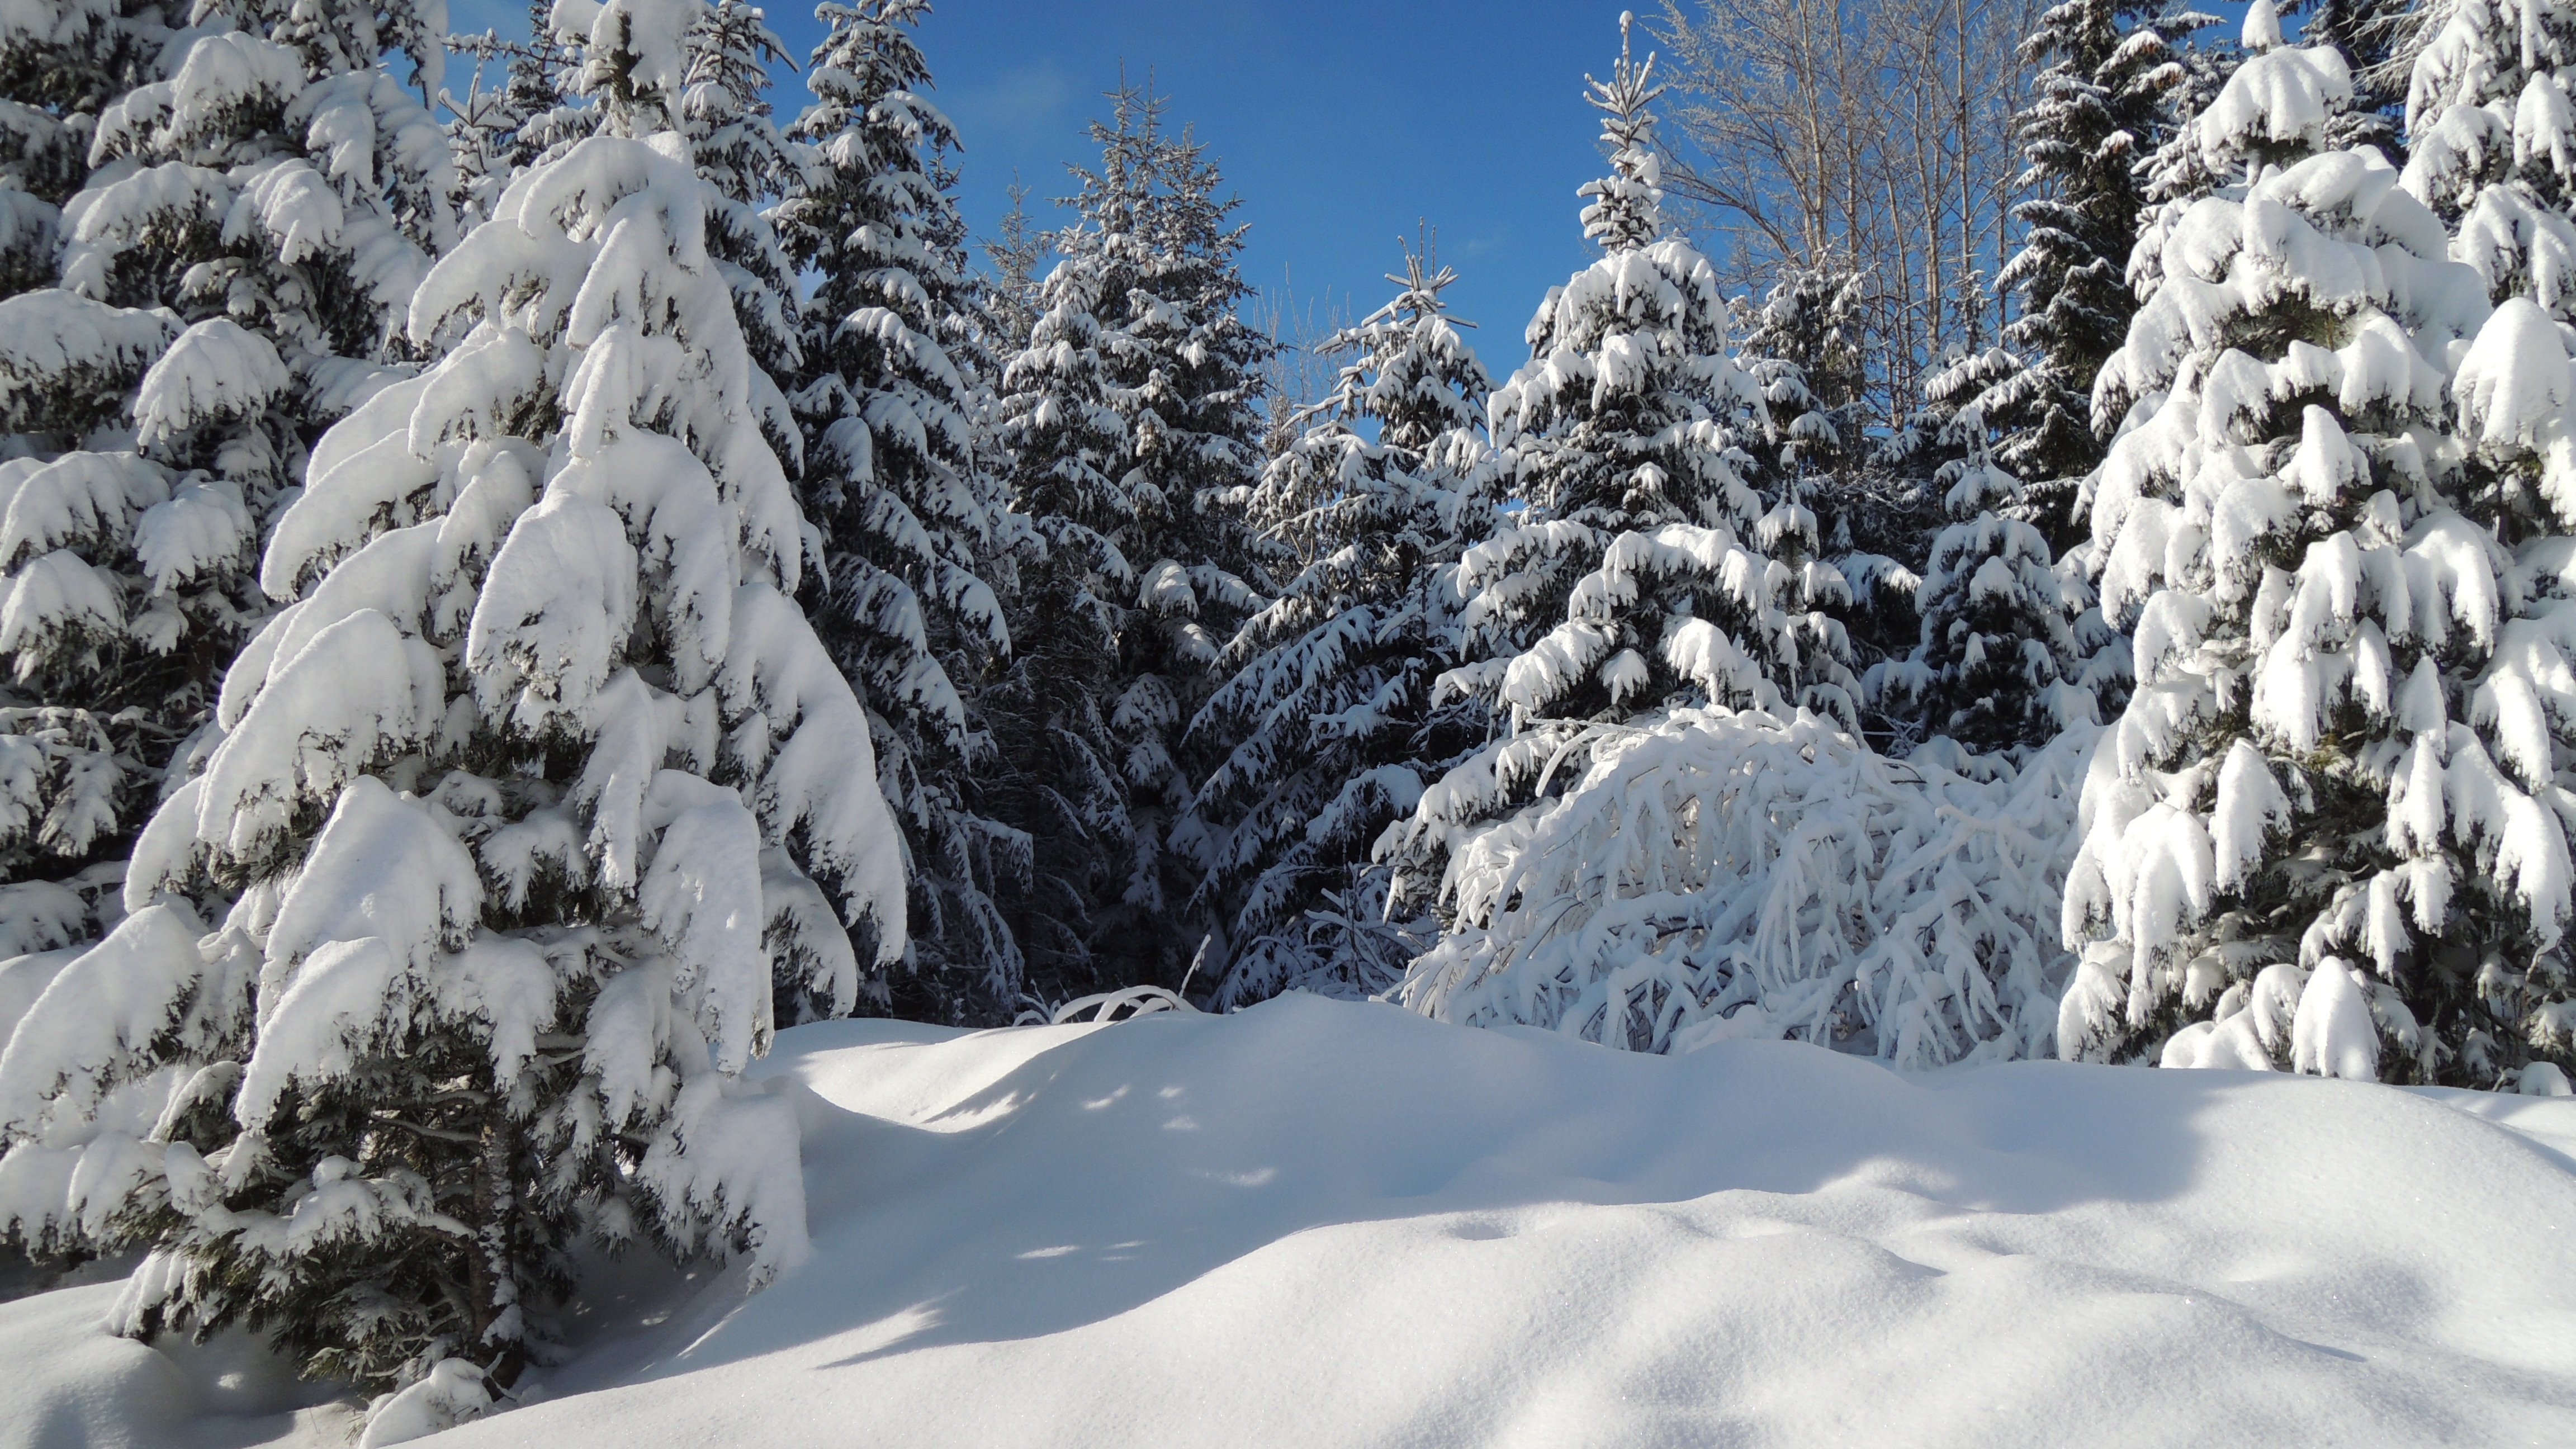 Snowy forest, winter in Europe